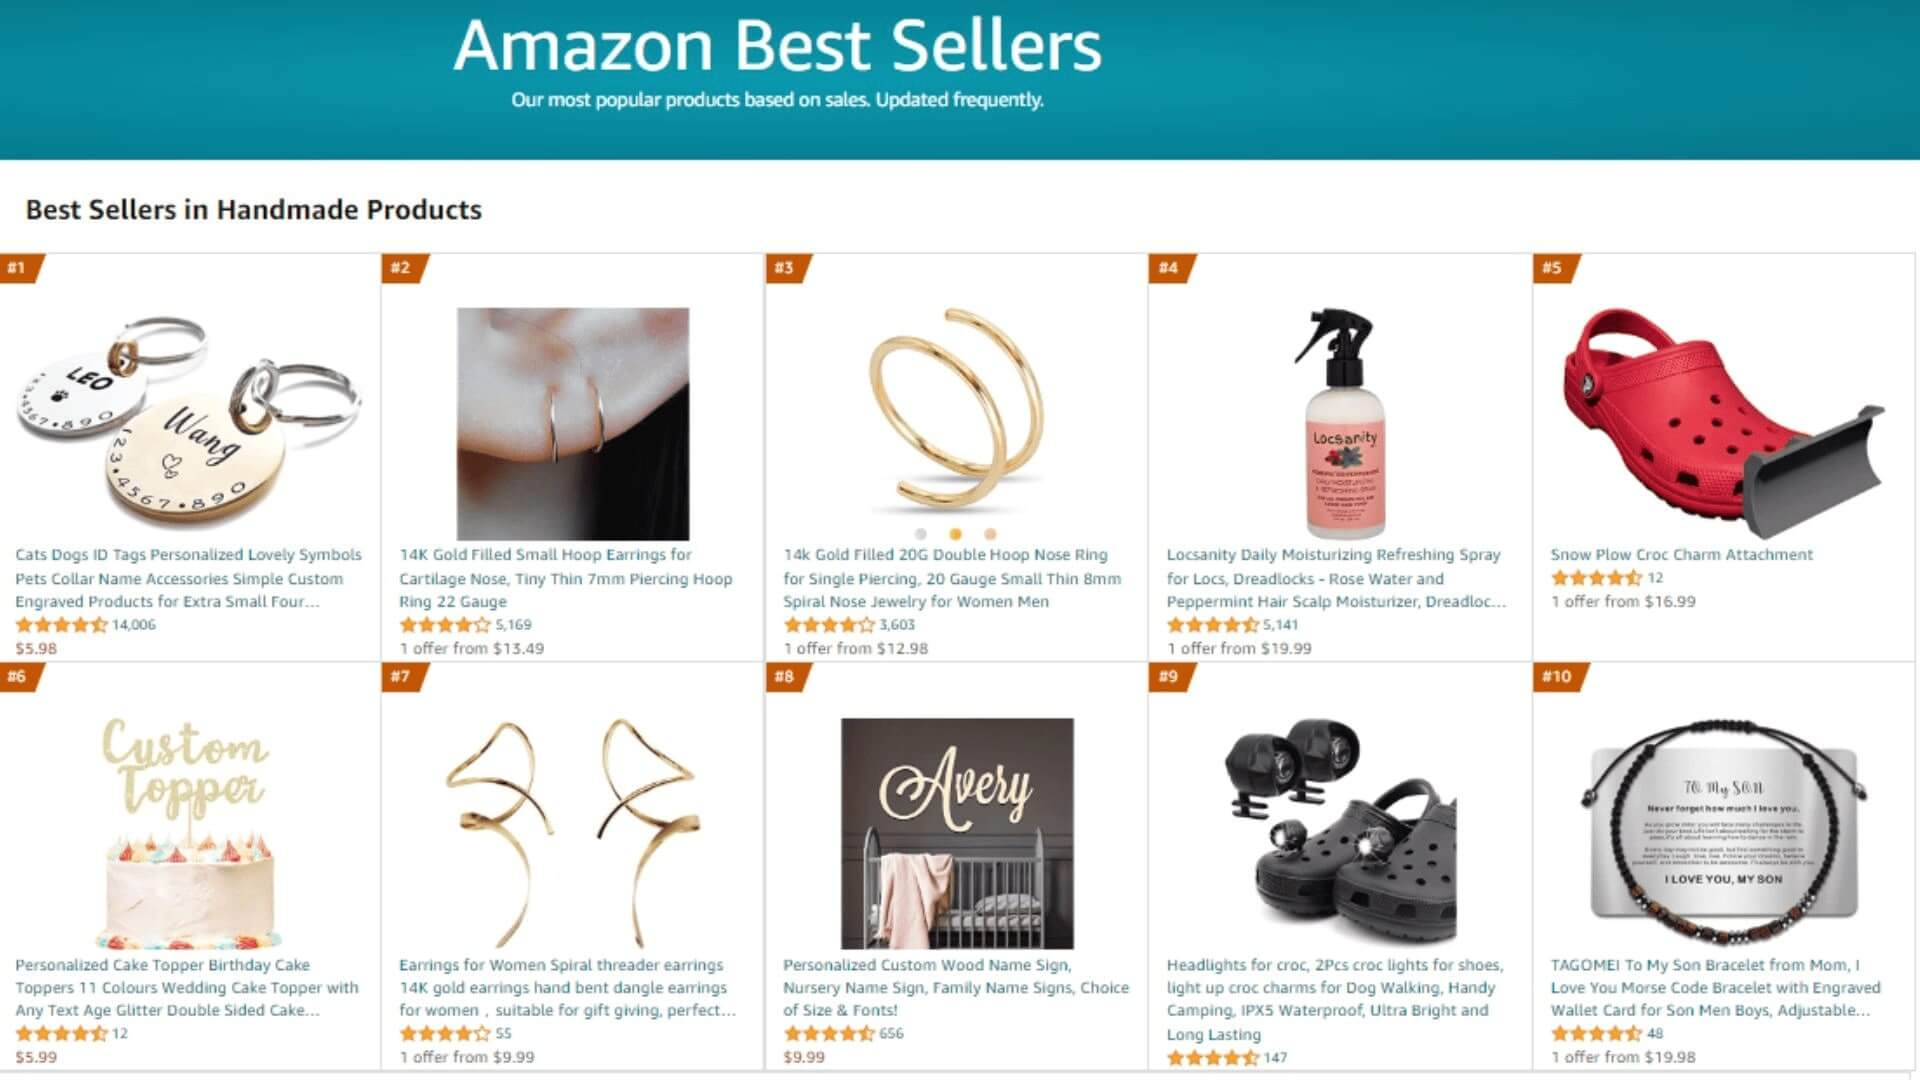 Most popular Handmade Products on Amazon